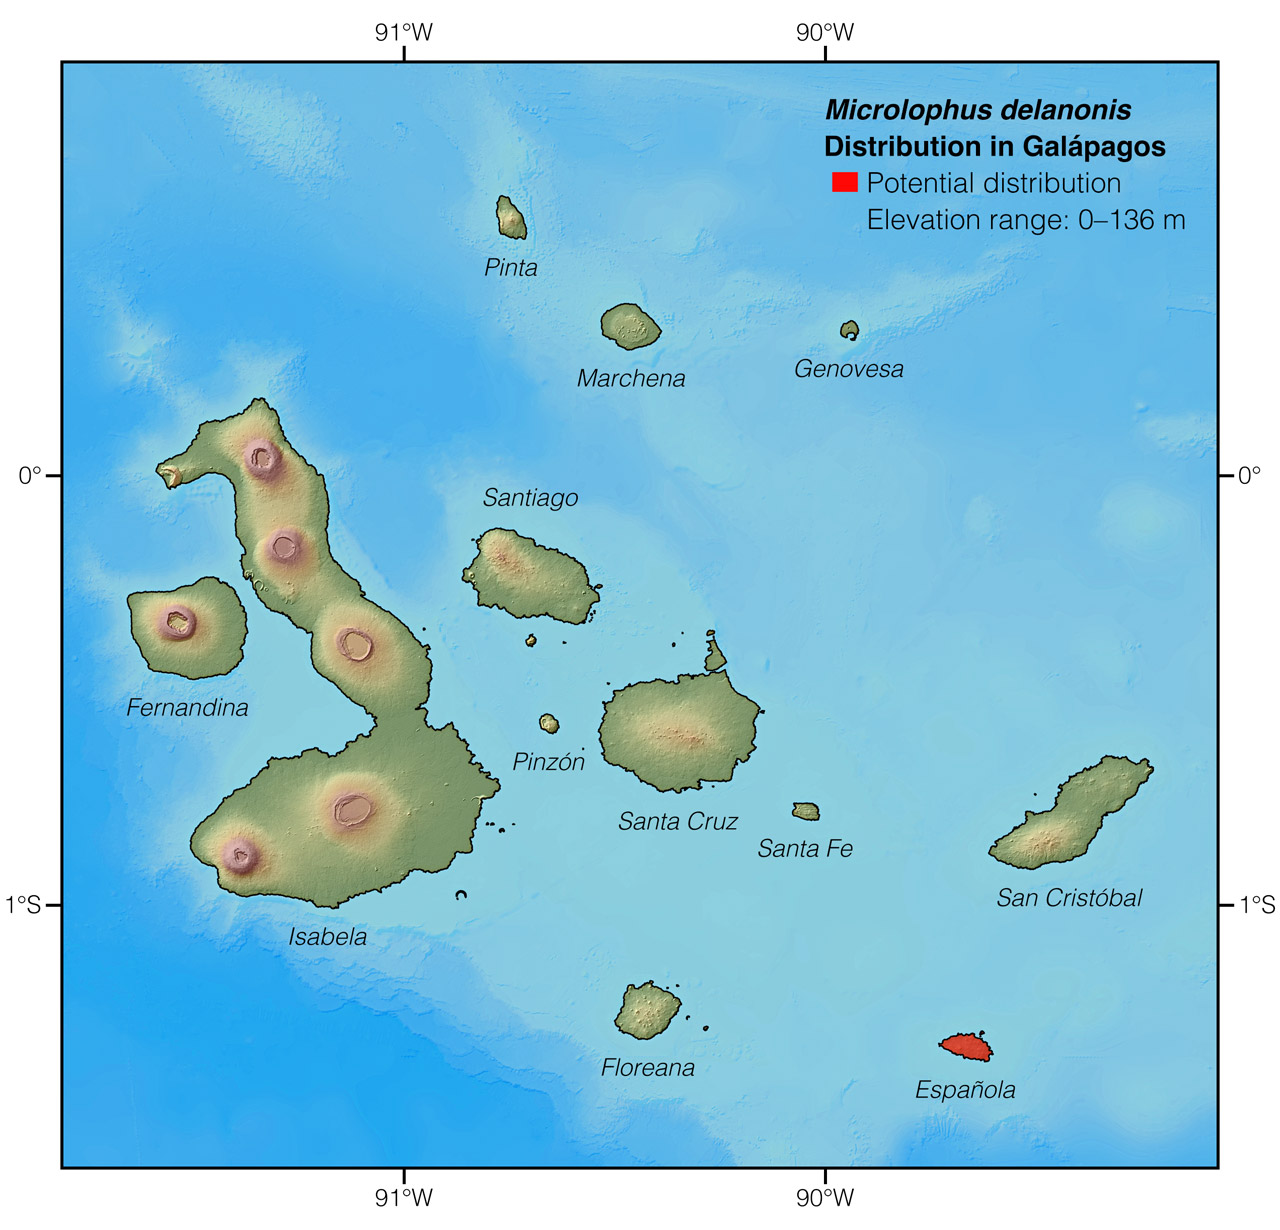 Distribution of Microlophus delanonis in Galápagos